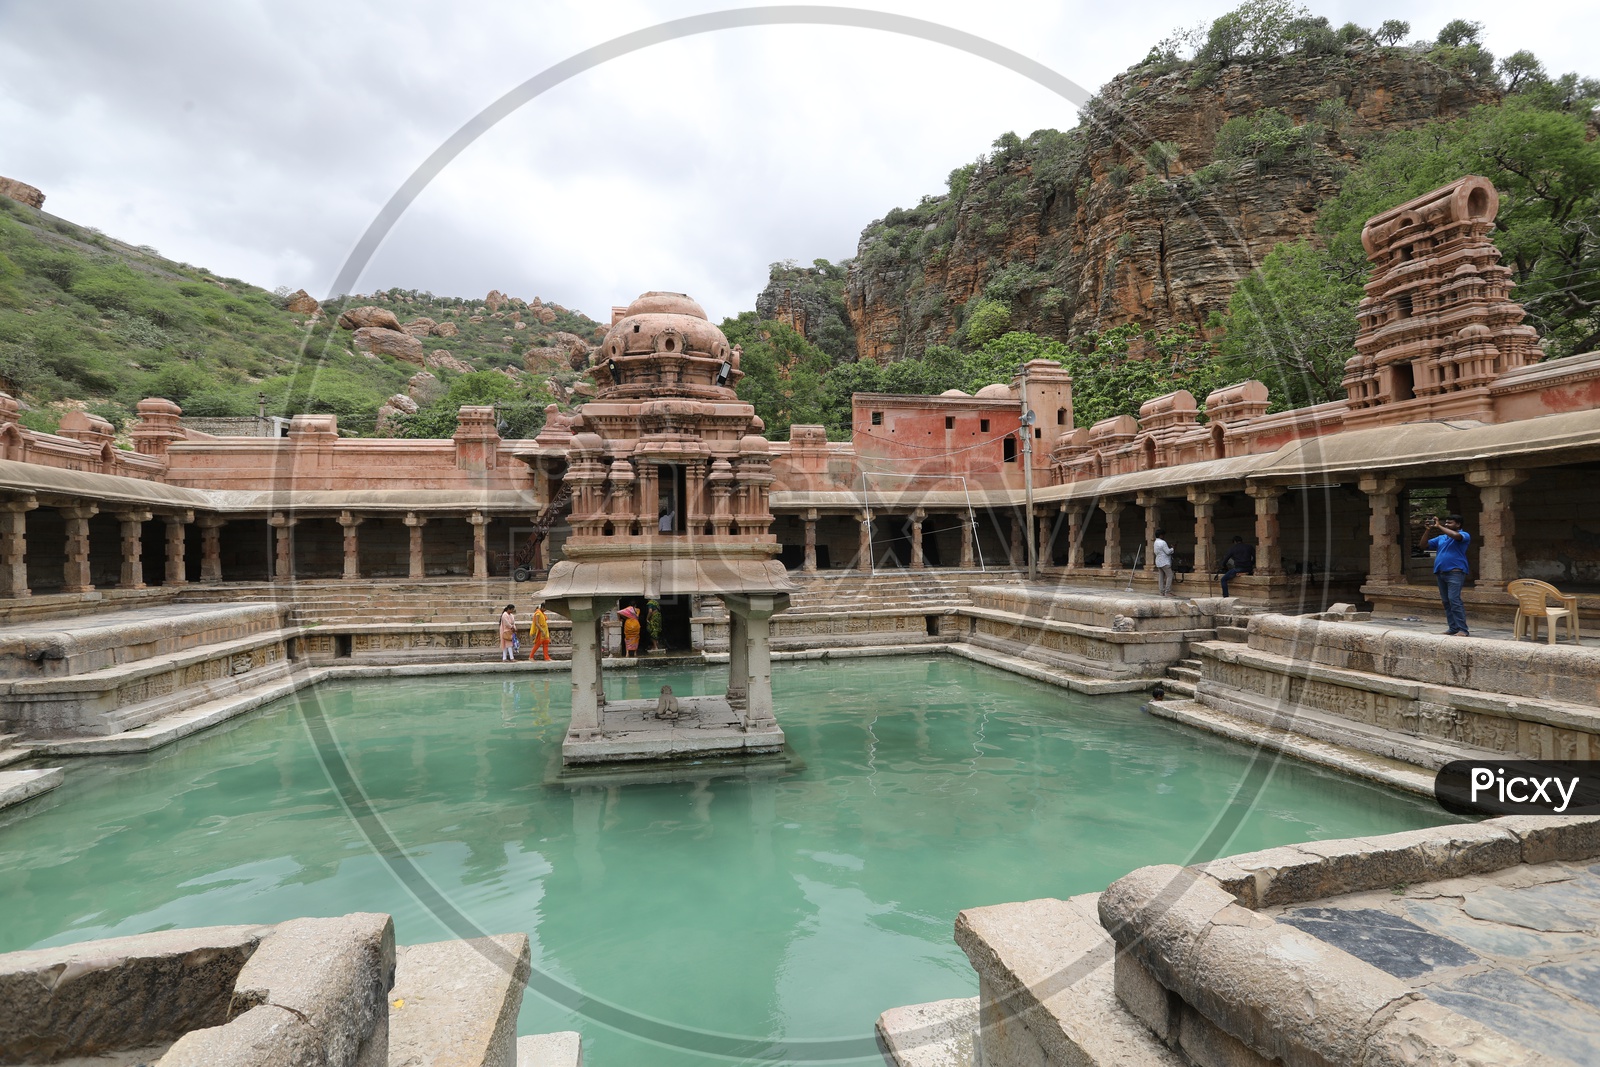 Temple Tank Or Temple Pool at Yaganti Sri Uma Maheshwara Temple